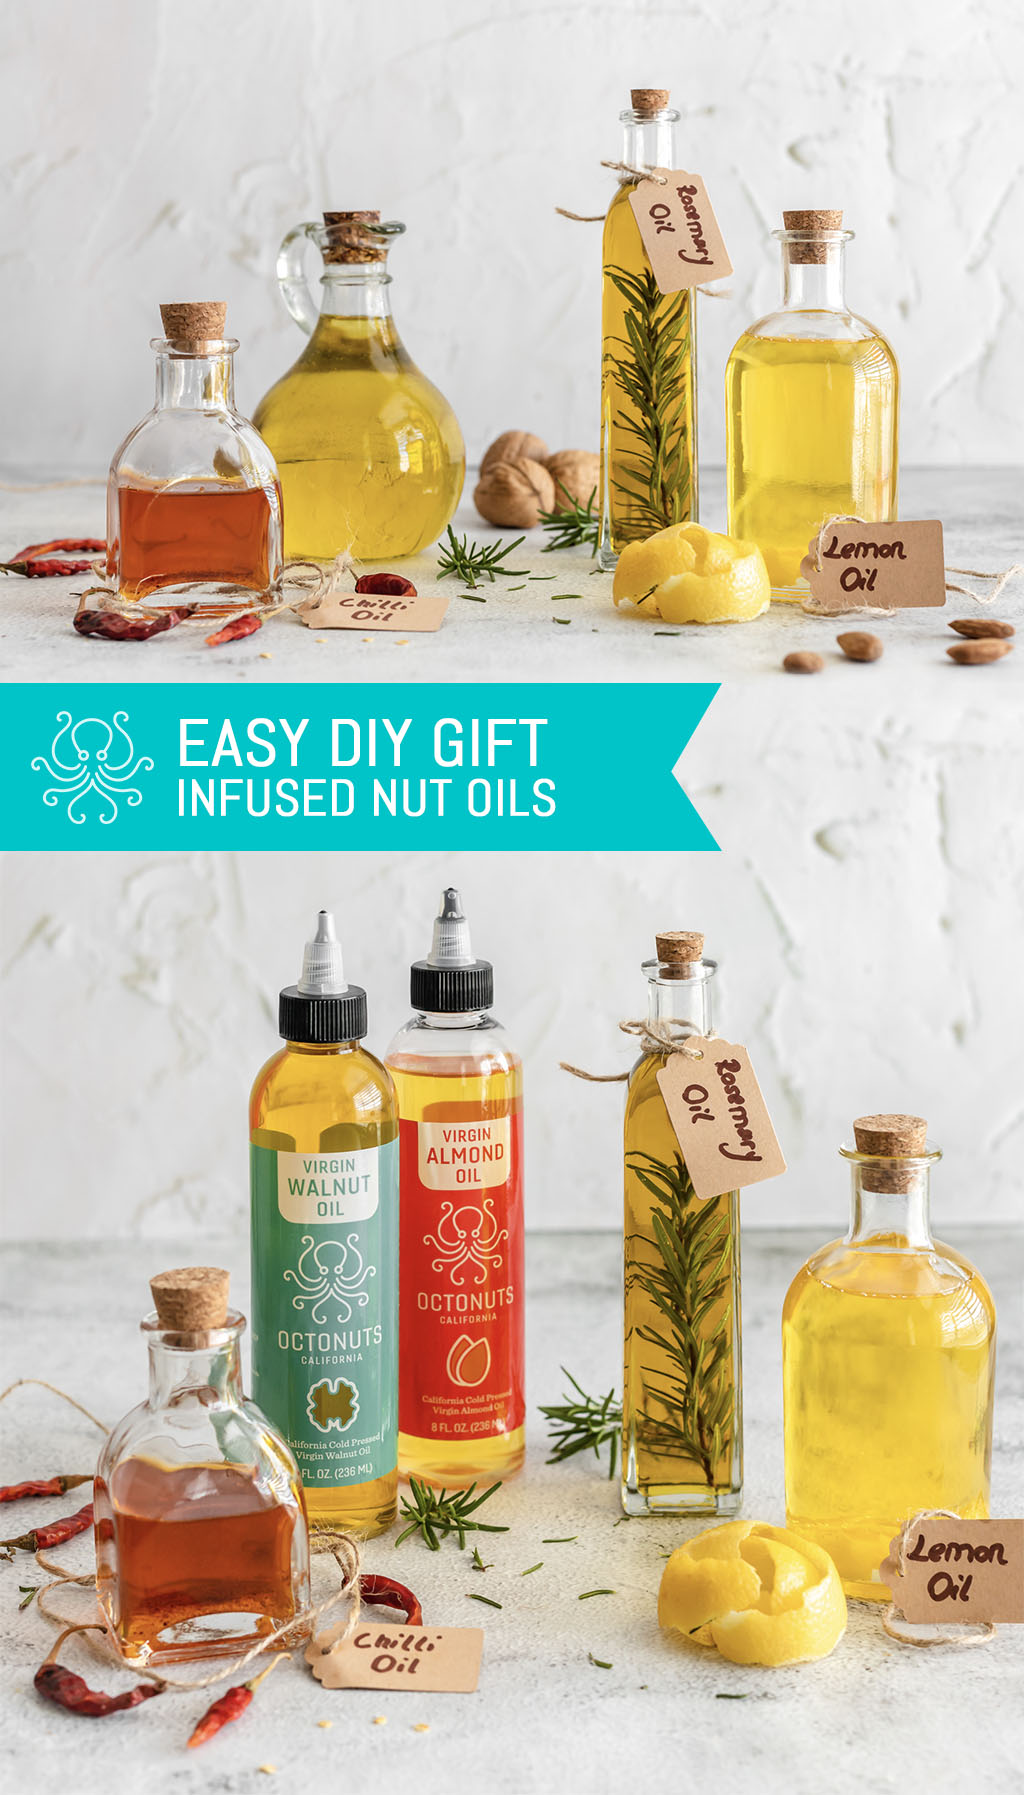 Easy DIY Gift: Infused Nut Oils